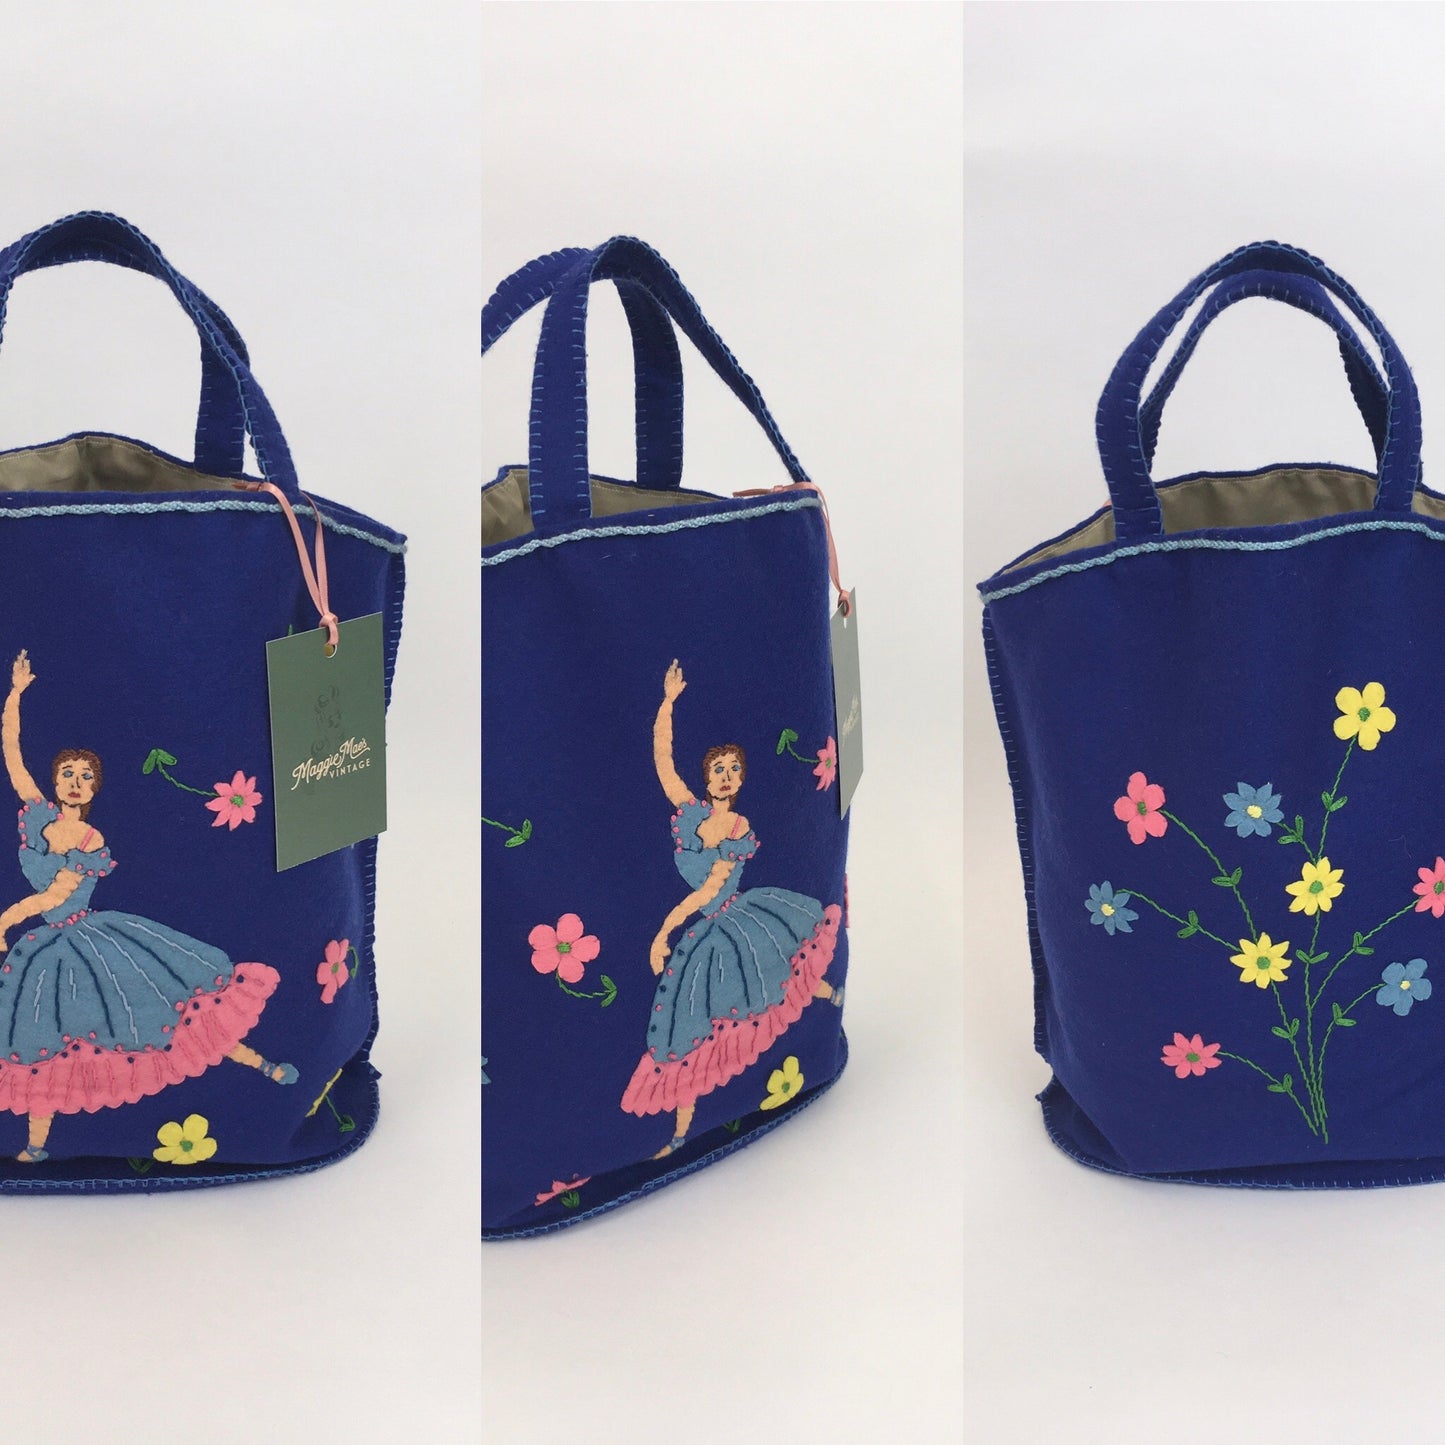 Original Late 1940s Early 1950’s Felt Handbag - ‘ Make do and Mend’ era Featuring a Ballerina and Floral Adornment